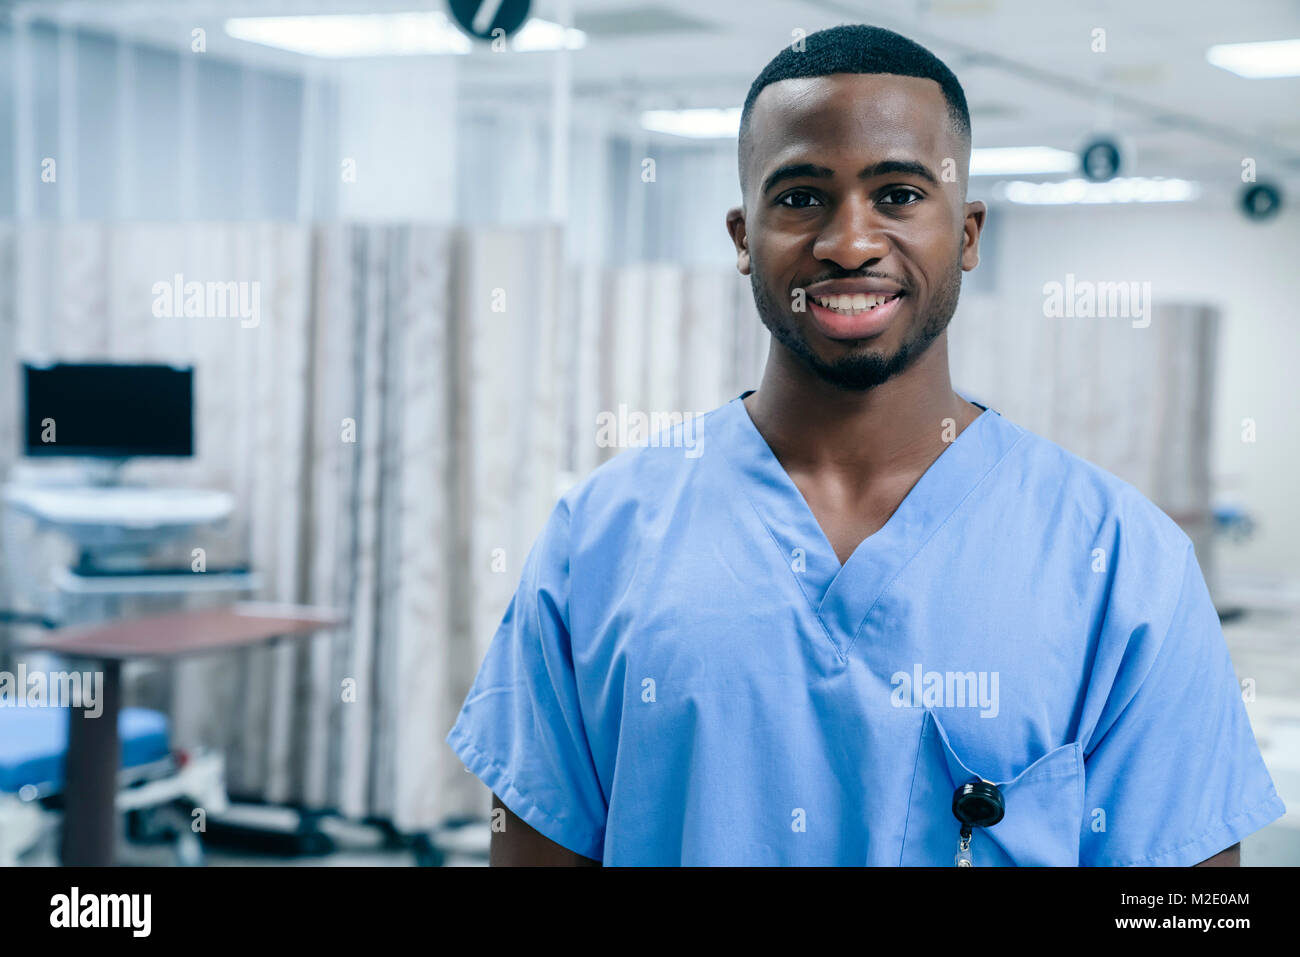 Portrait of smiling Black doctor in hospital Stock Photo